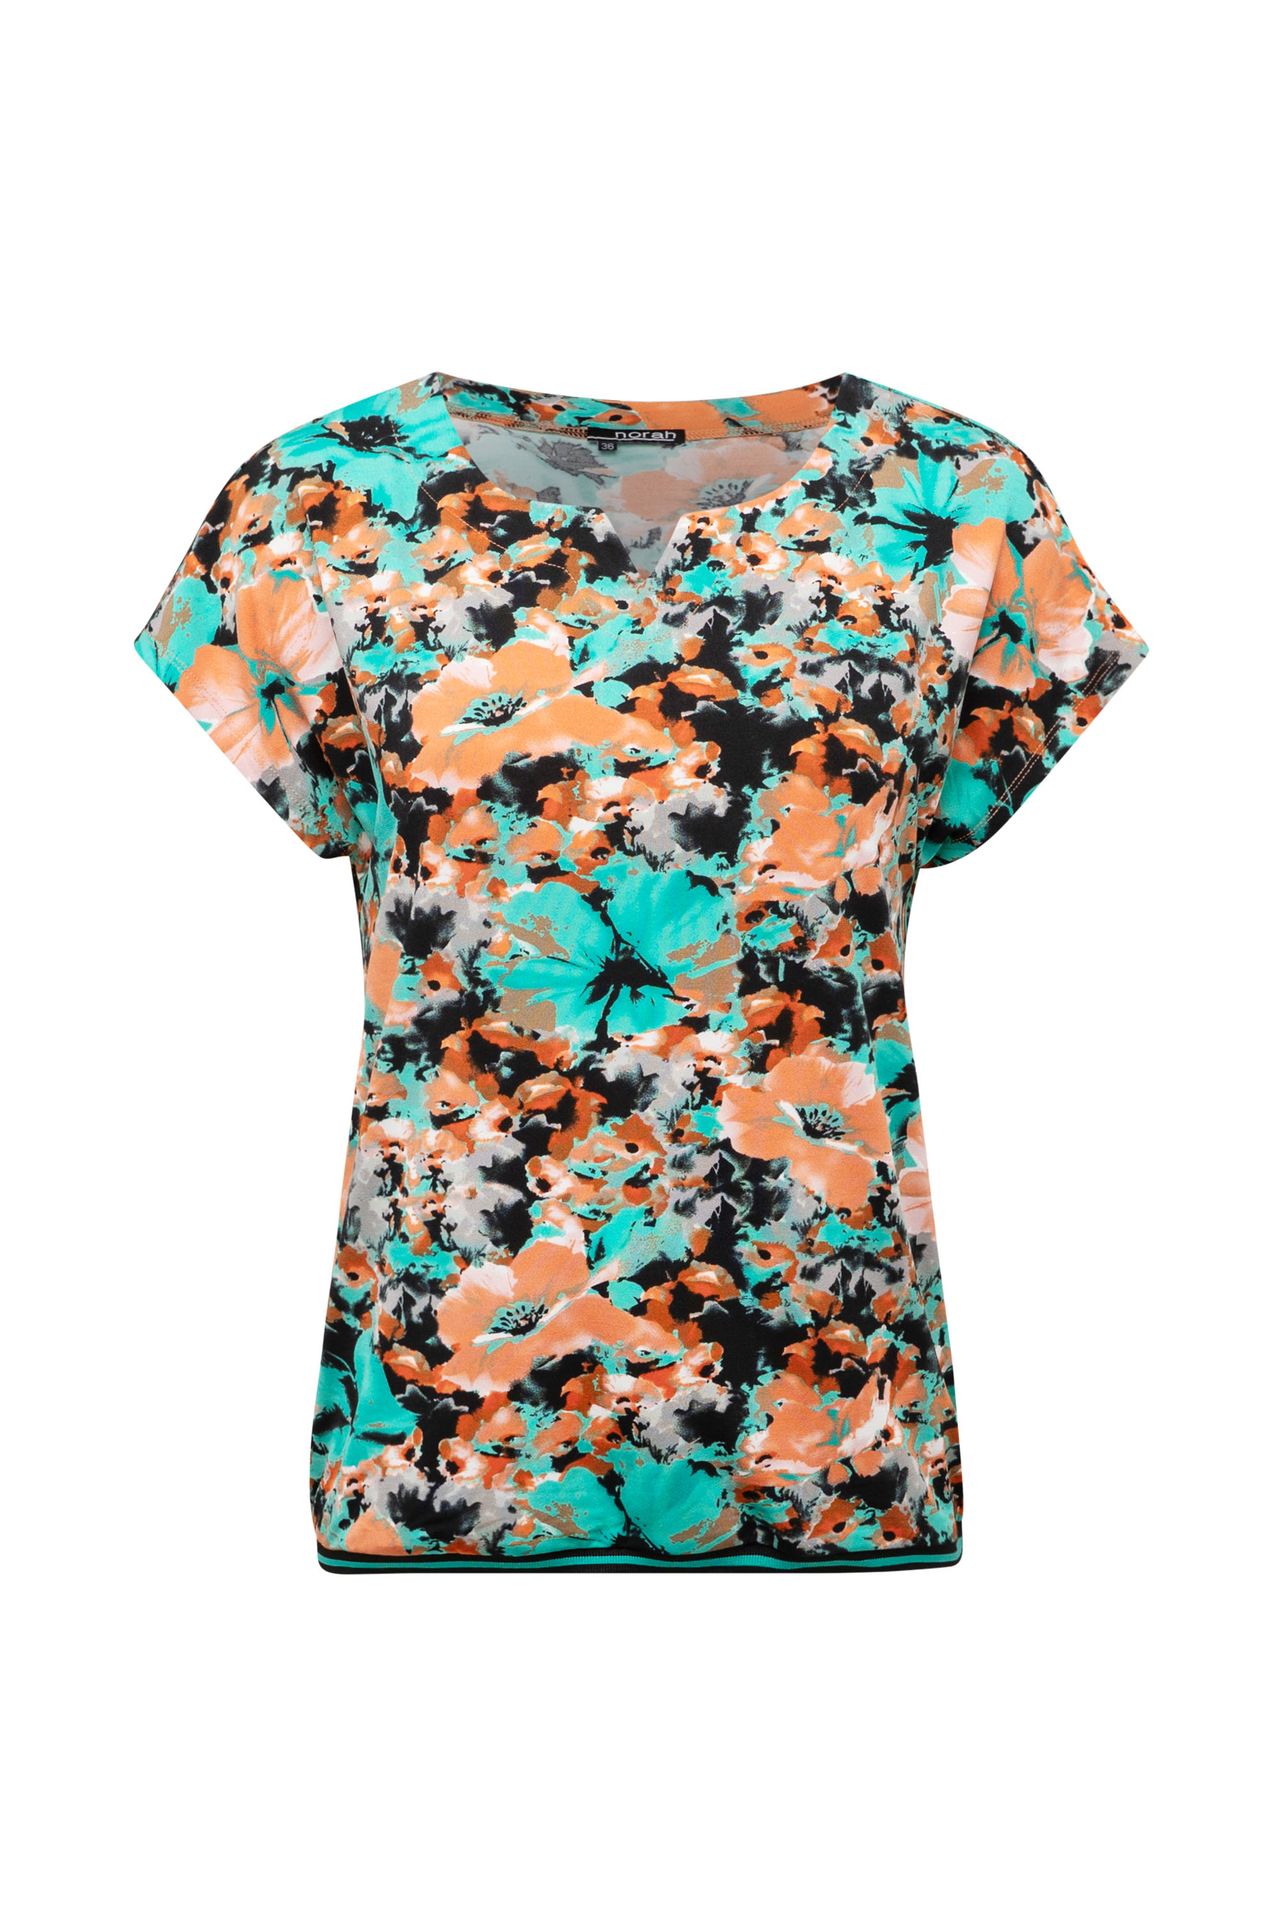 Norah Shirt meerkleurig multicolor 213821-002